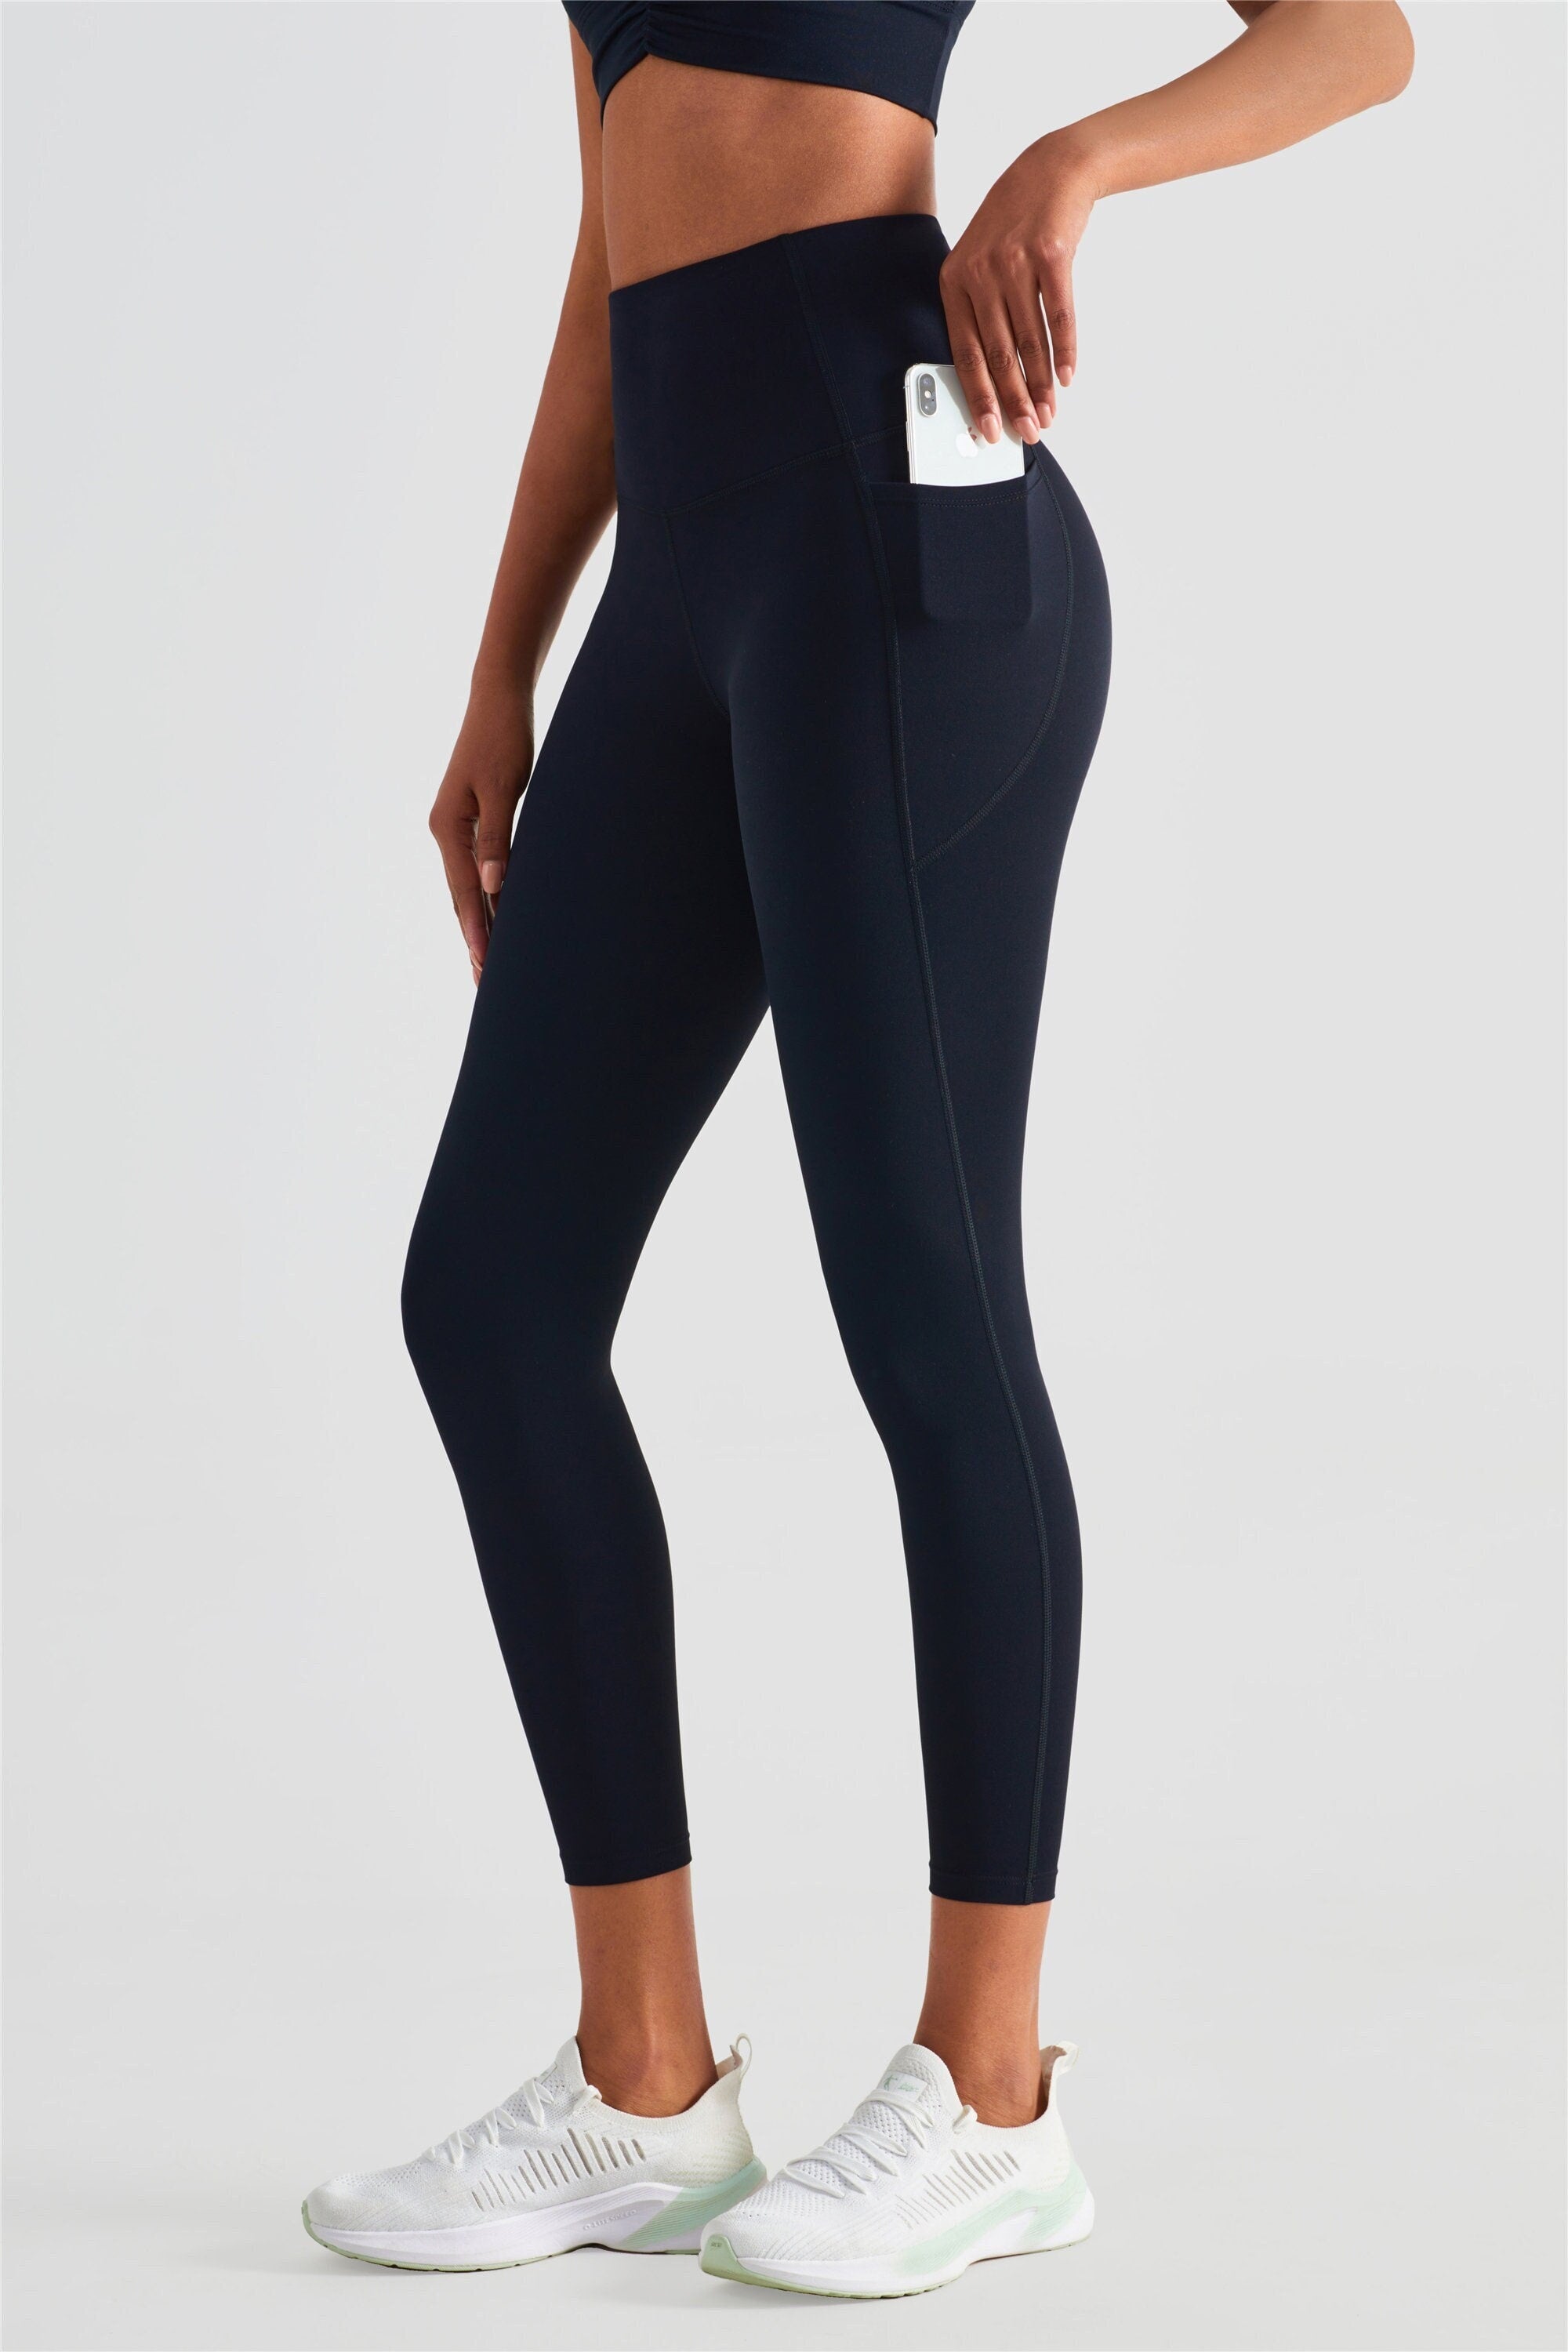 Blank Activewear L894  Ladies Yoga Pant tights 75 Nylon 25 Spandex  Interlock  Wordans Canada